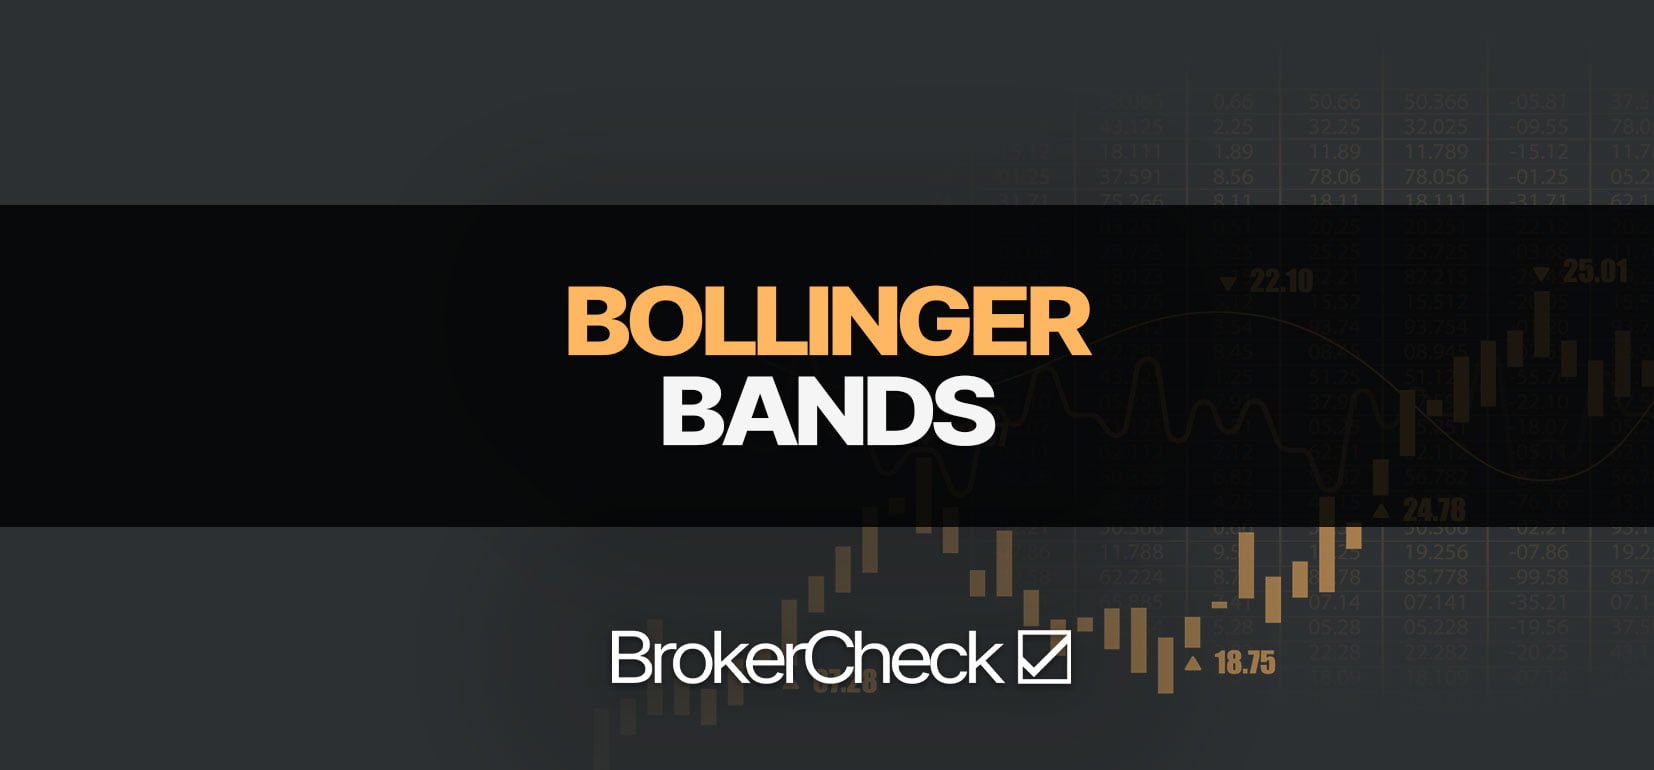 Mga Bollinger Band: Mga Setting, Formula, Diskarte